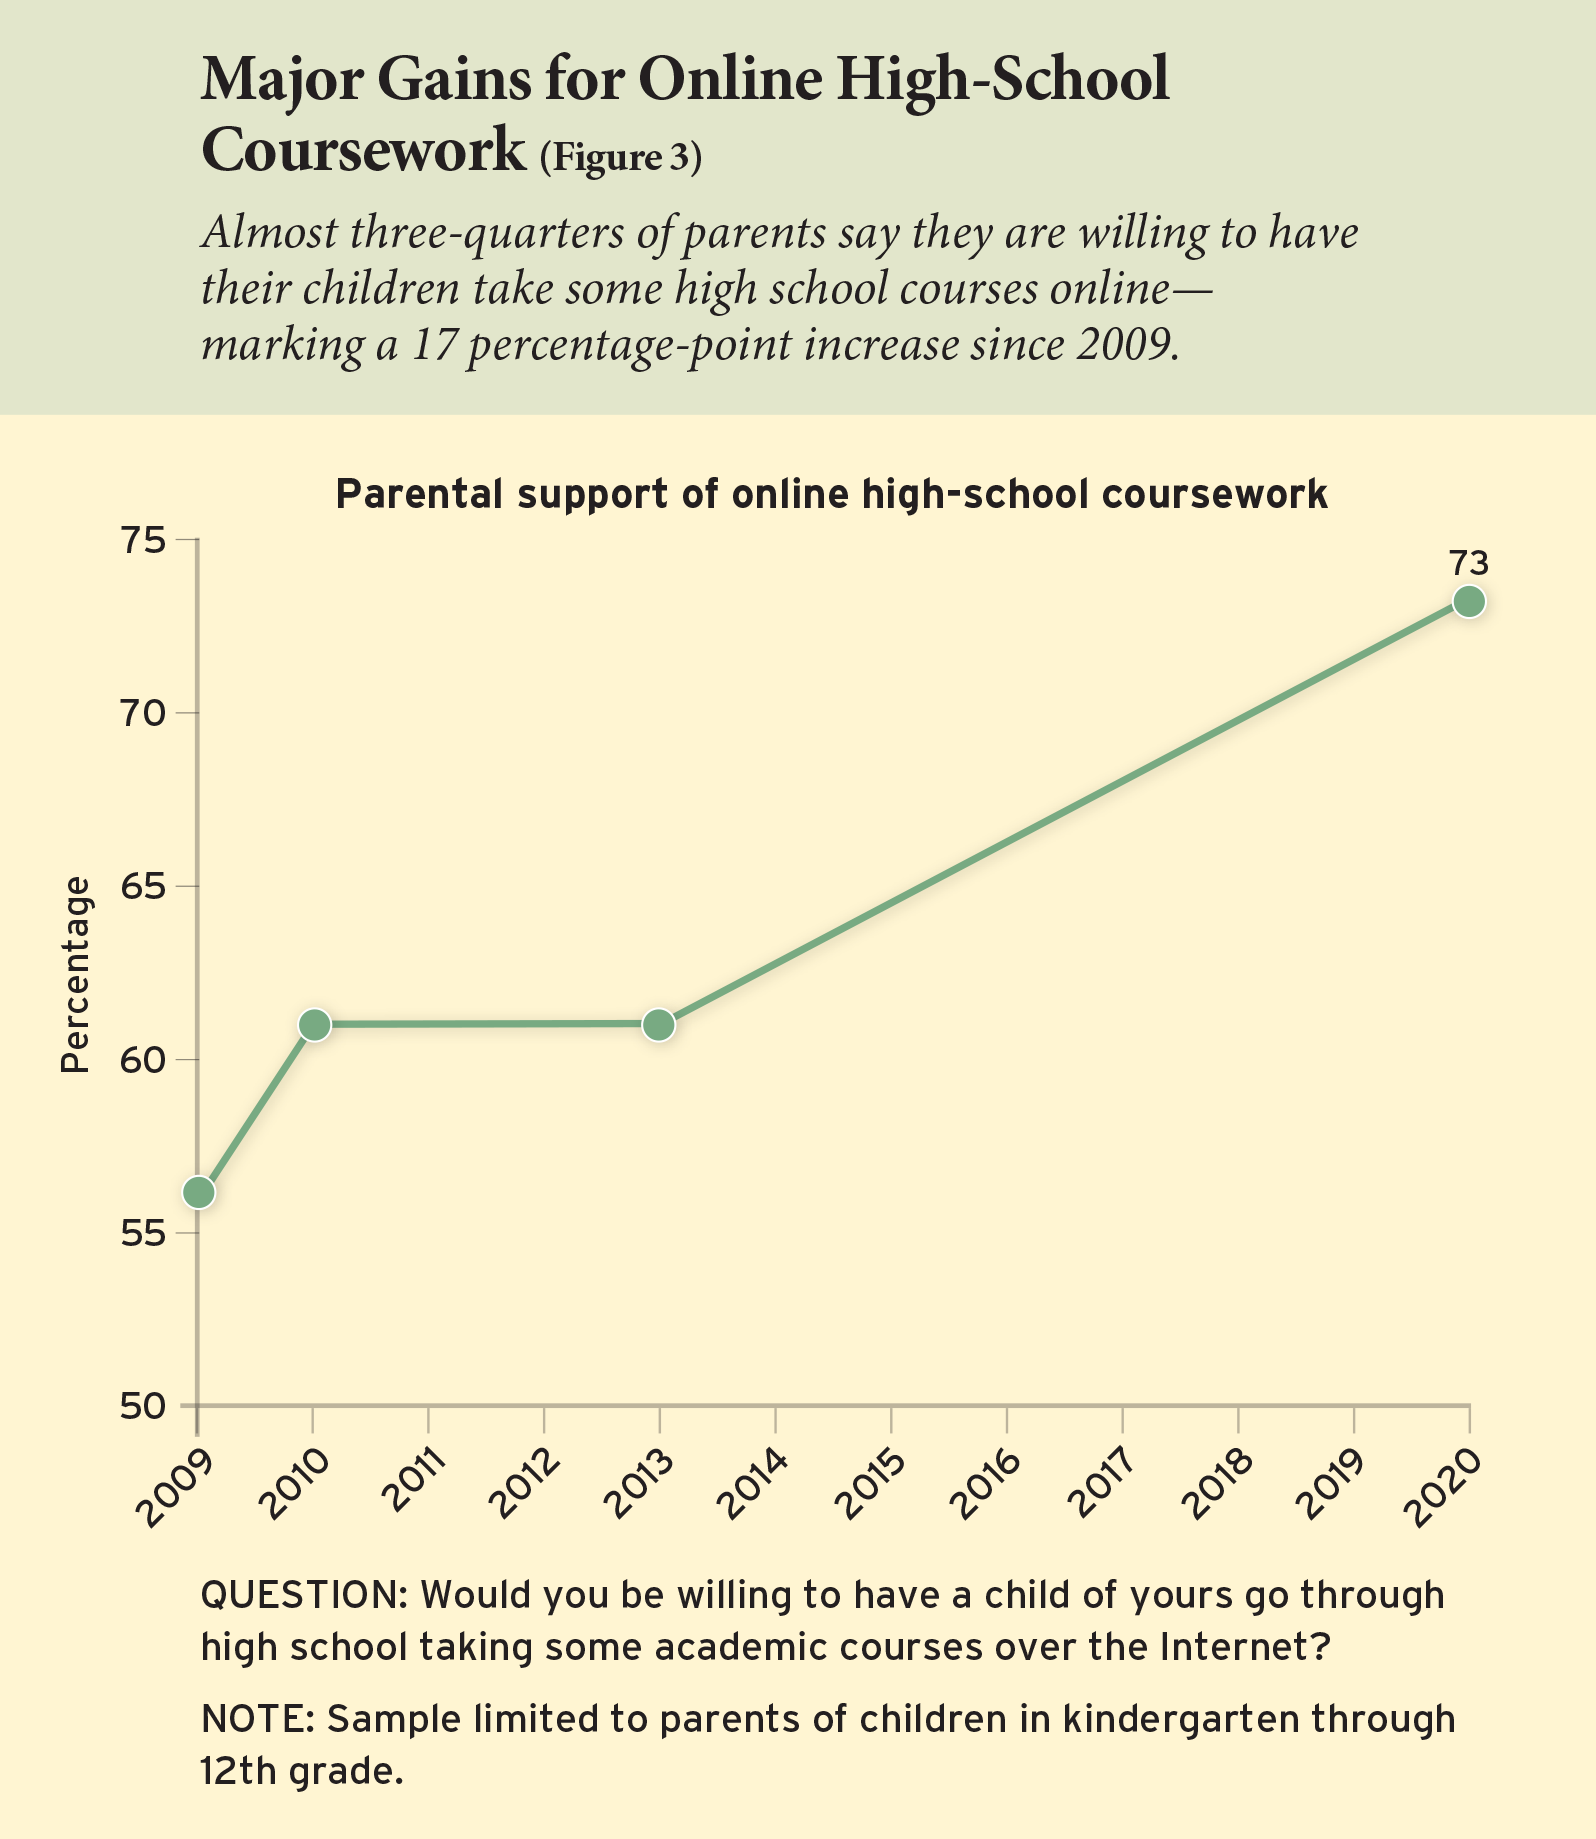 Figure 3: Major Gains for Online High-School Coursework